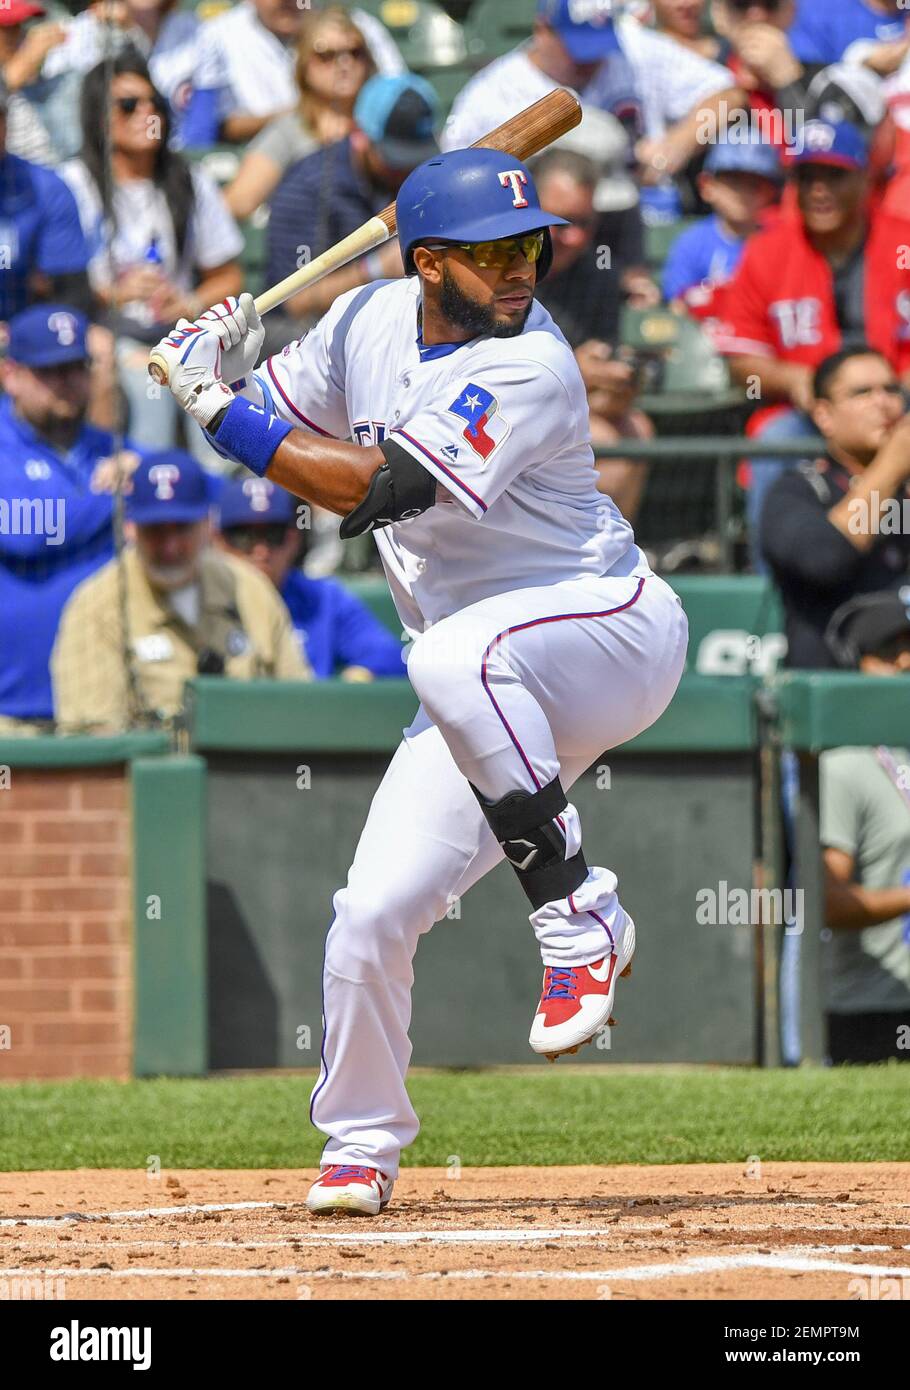 June 23, 2019: Texas Rangers shortstop Elvis Andrus #1 forces out